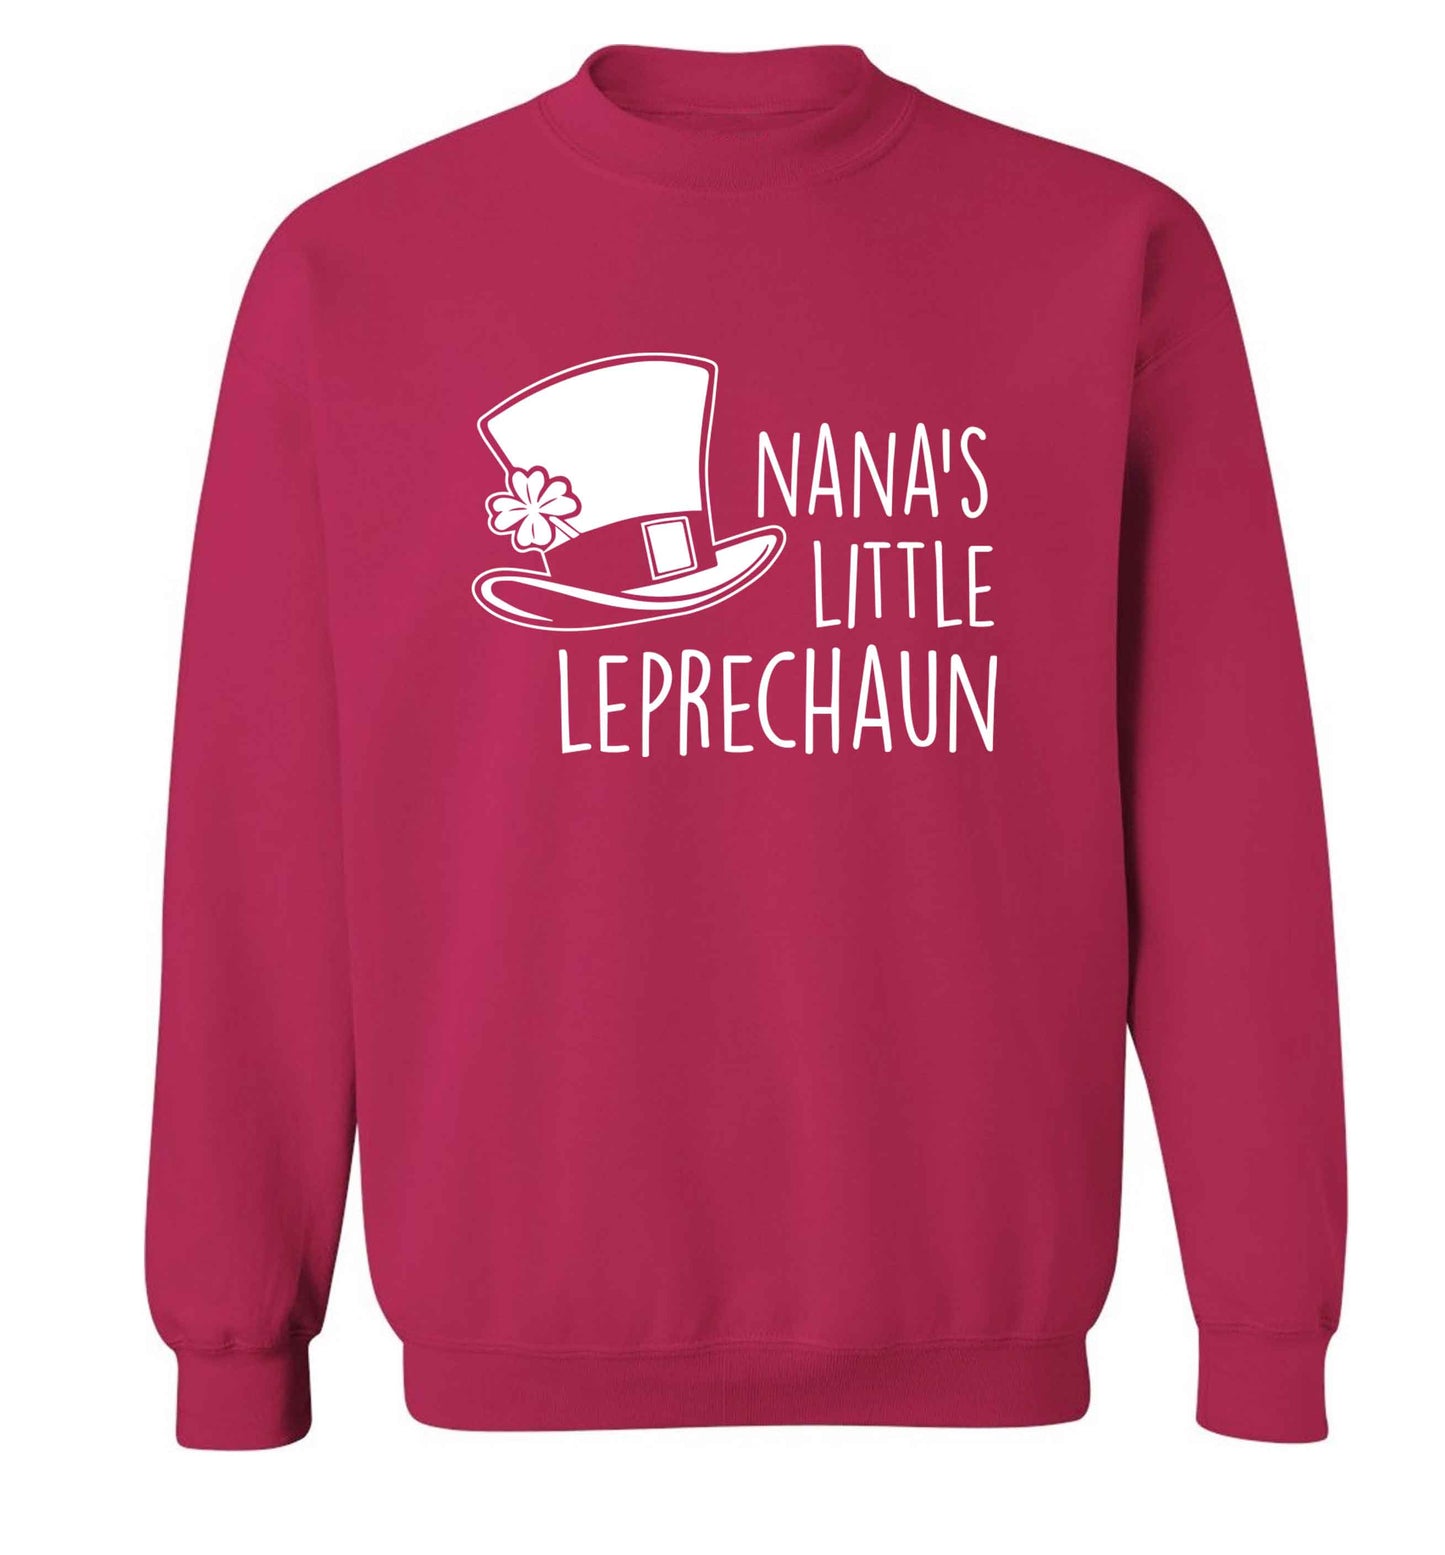 Nana's little leprechaun adult's unisex pink sweater 2XL